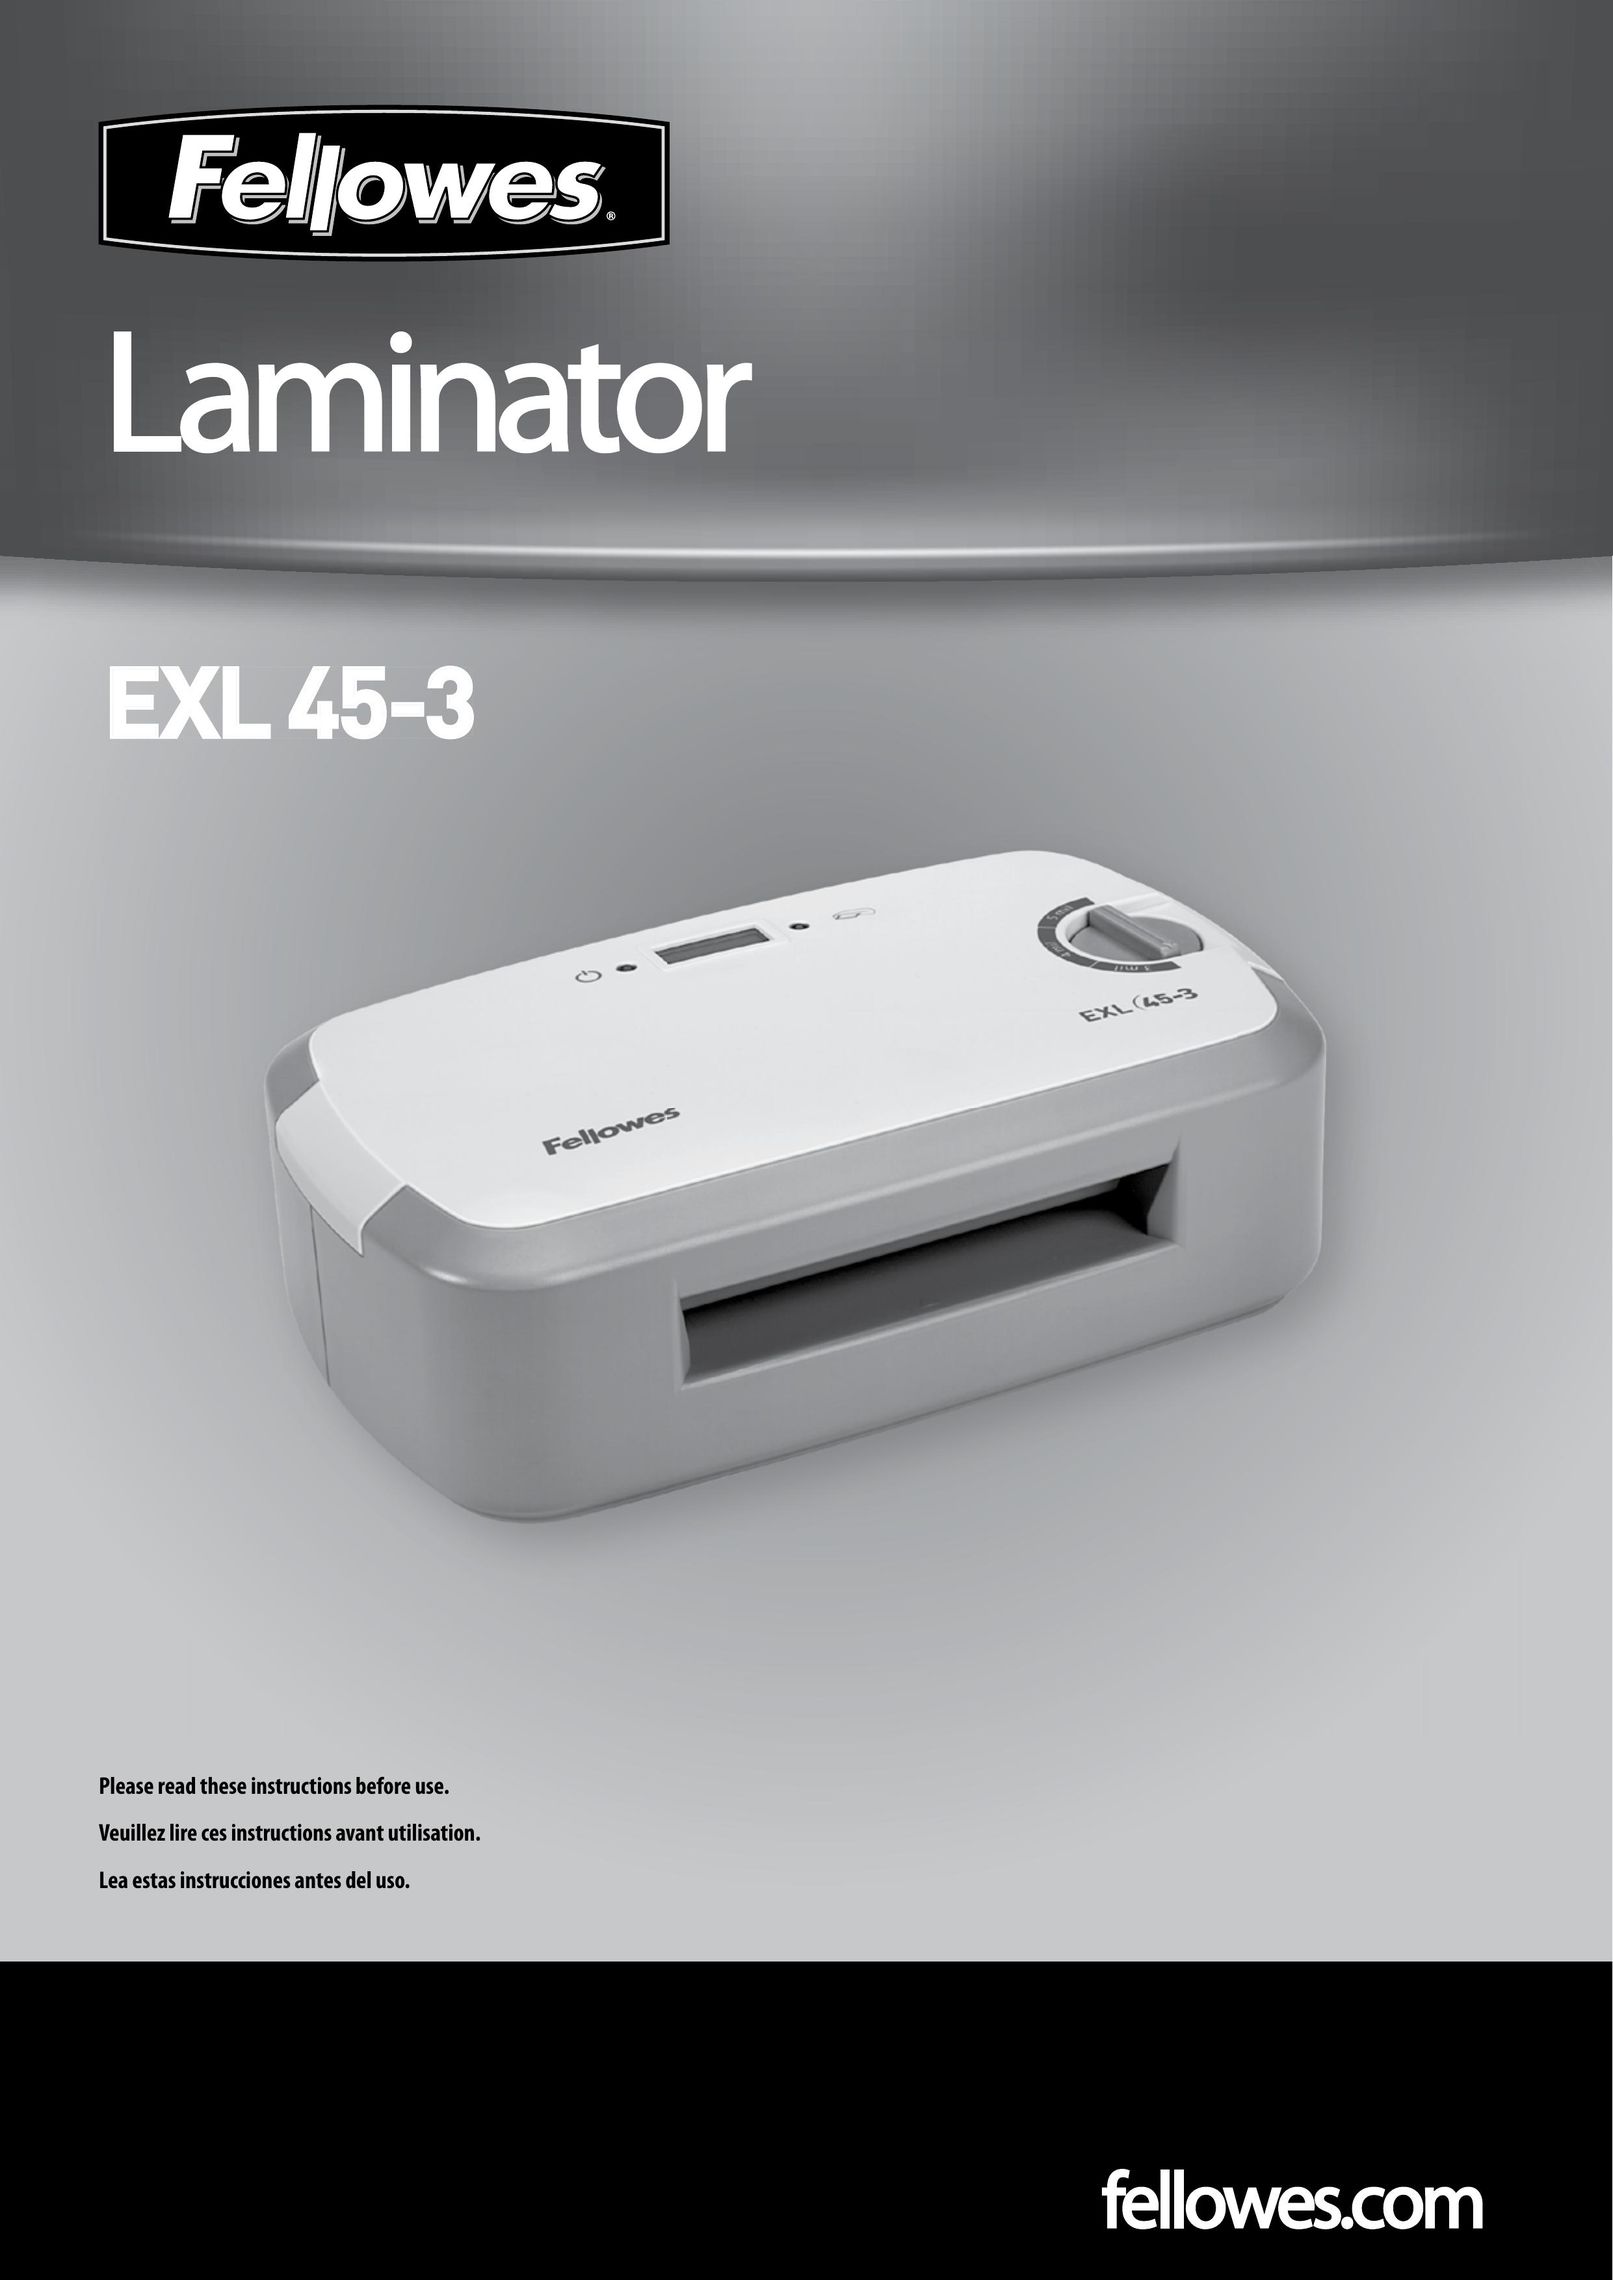 Fellowes EXL45-3 Laminator User Manual